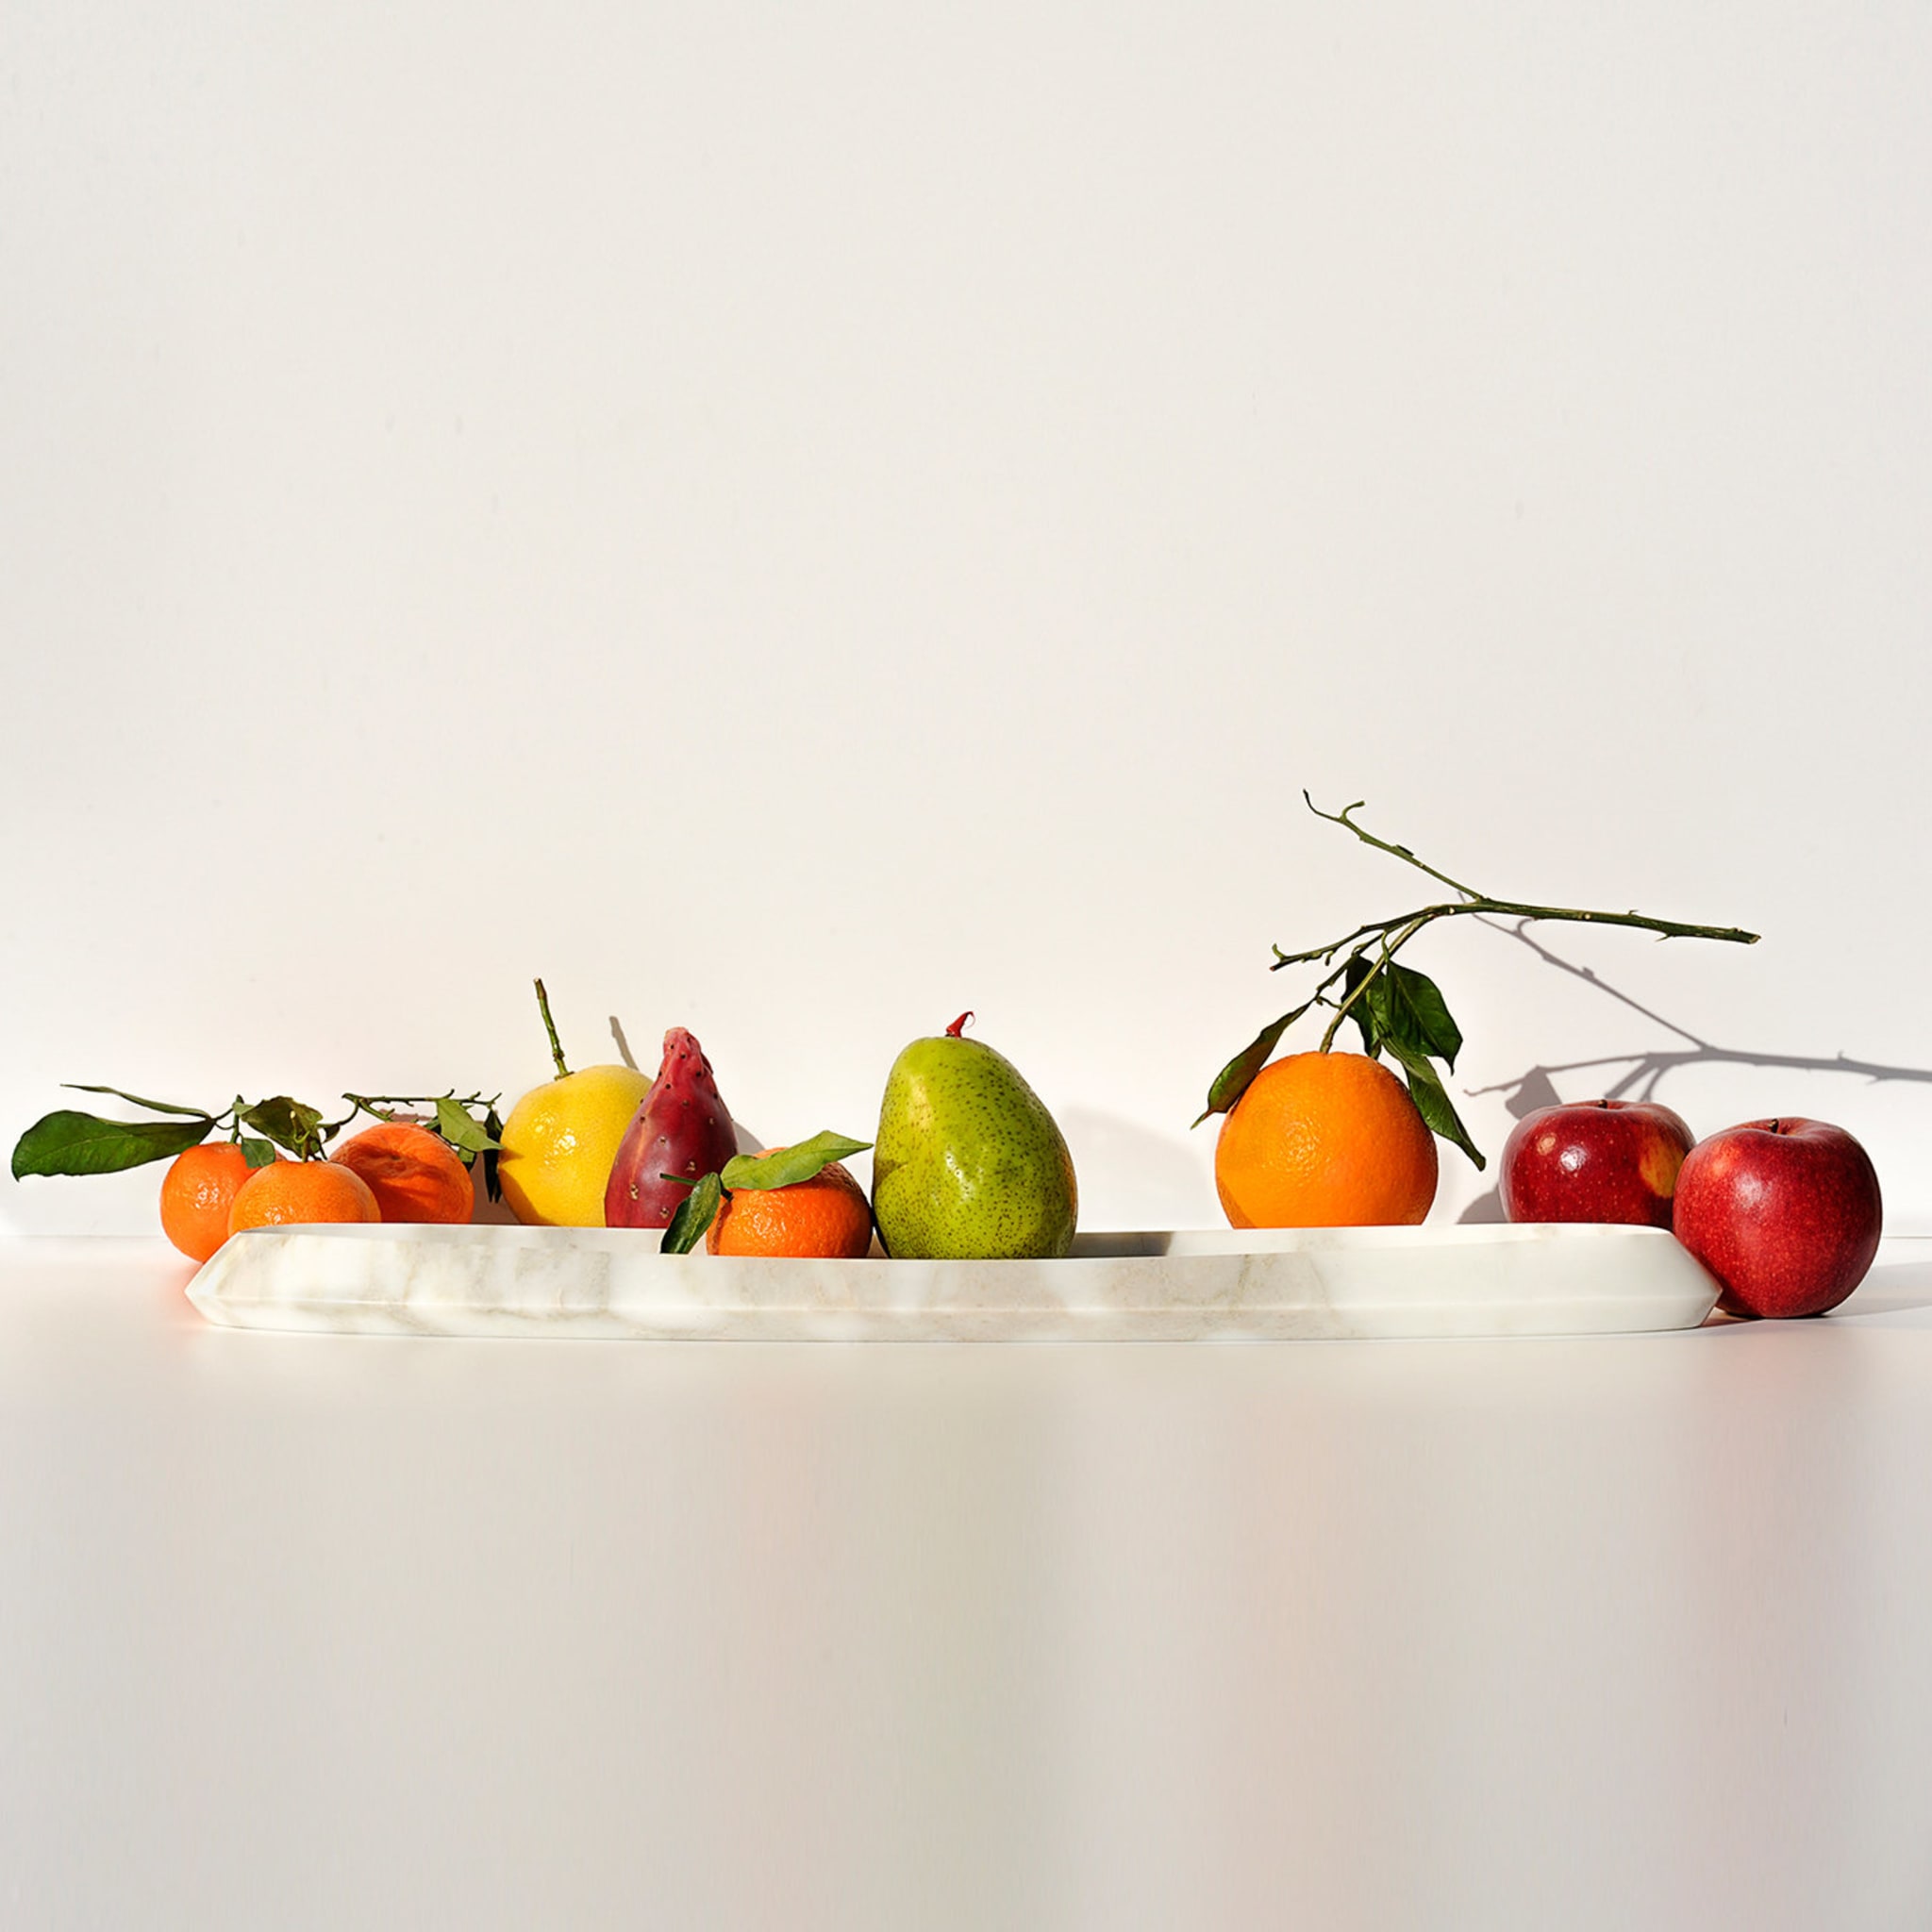 Ipazia Calacatta Oro Fruit Bowl  - Alternative view 4